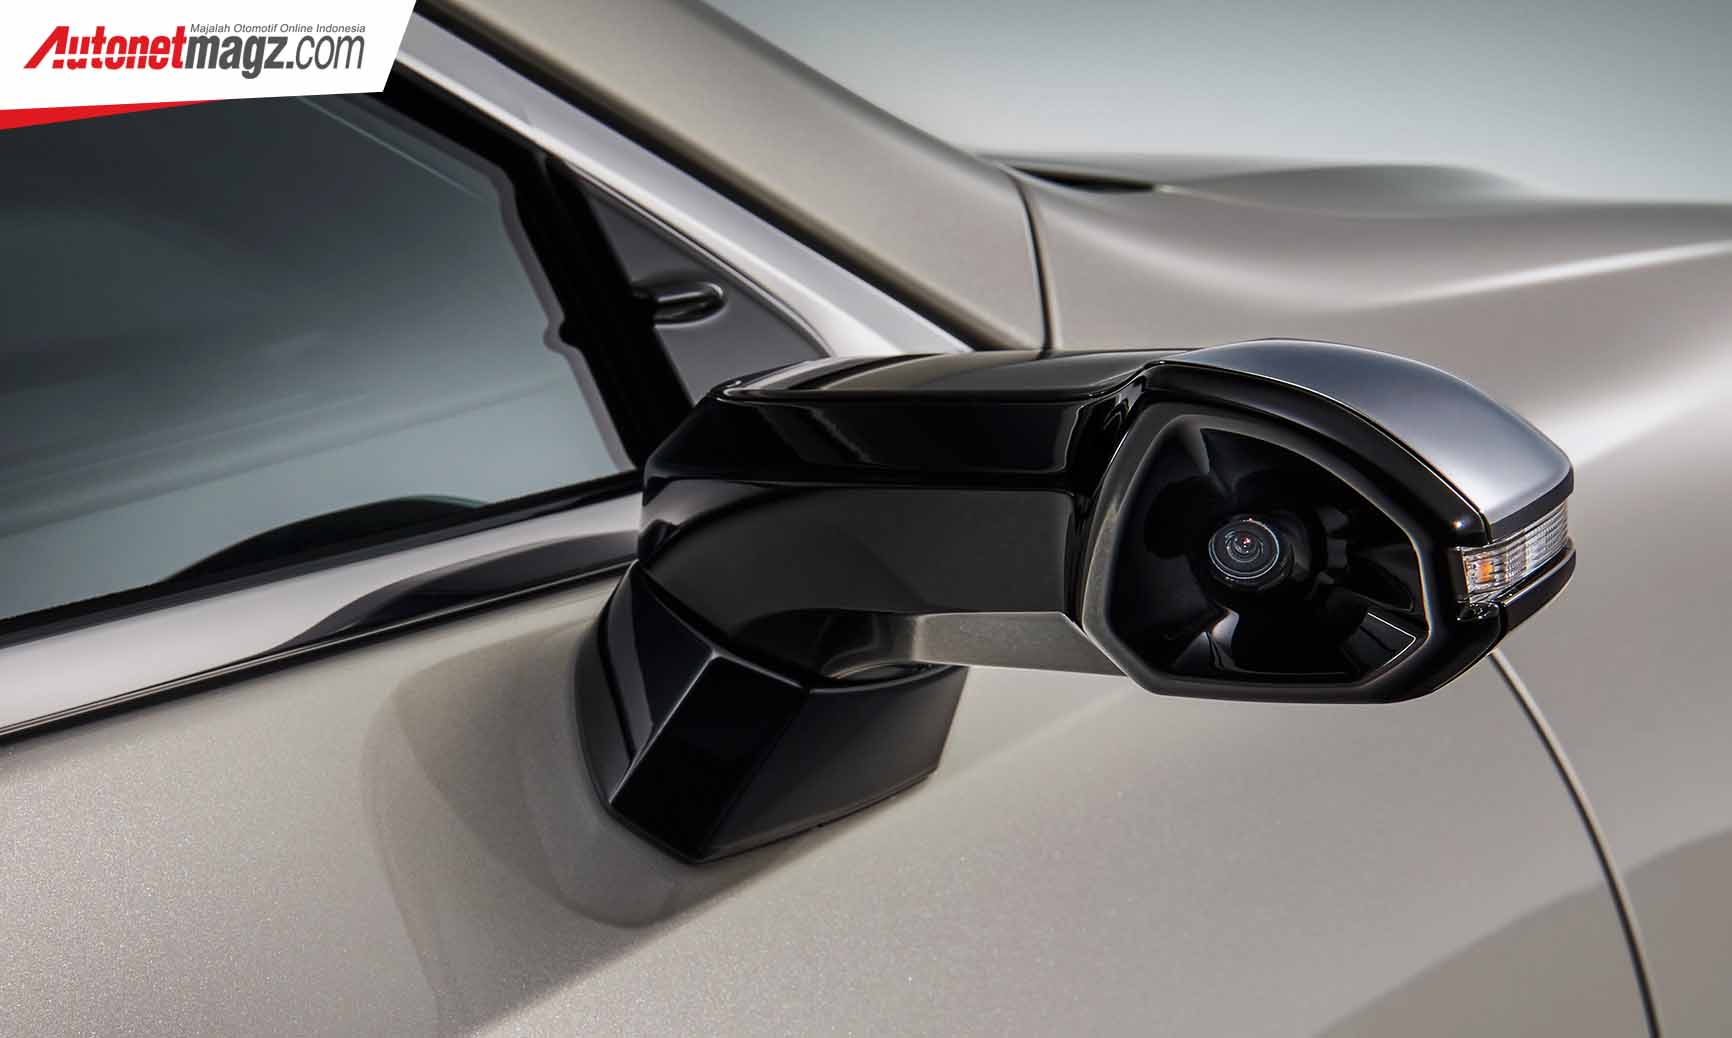 Berita, Kamera Digital Outer Mirrors Lexus: Lexus : Pakai Spion? Waktunya Pakai Kamera Sob!